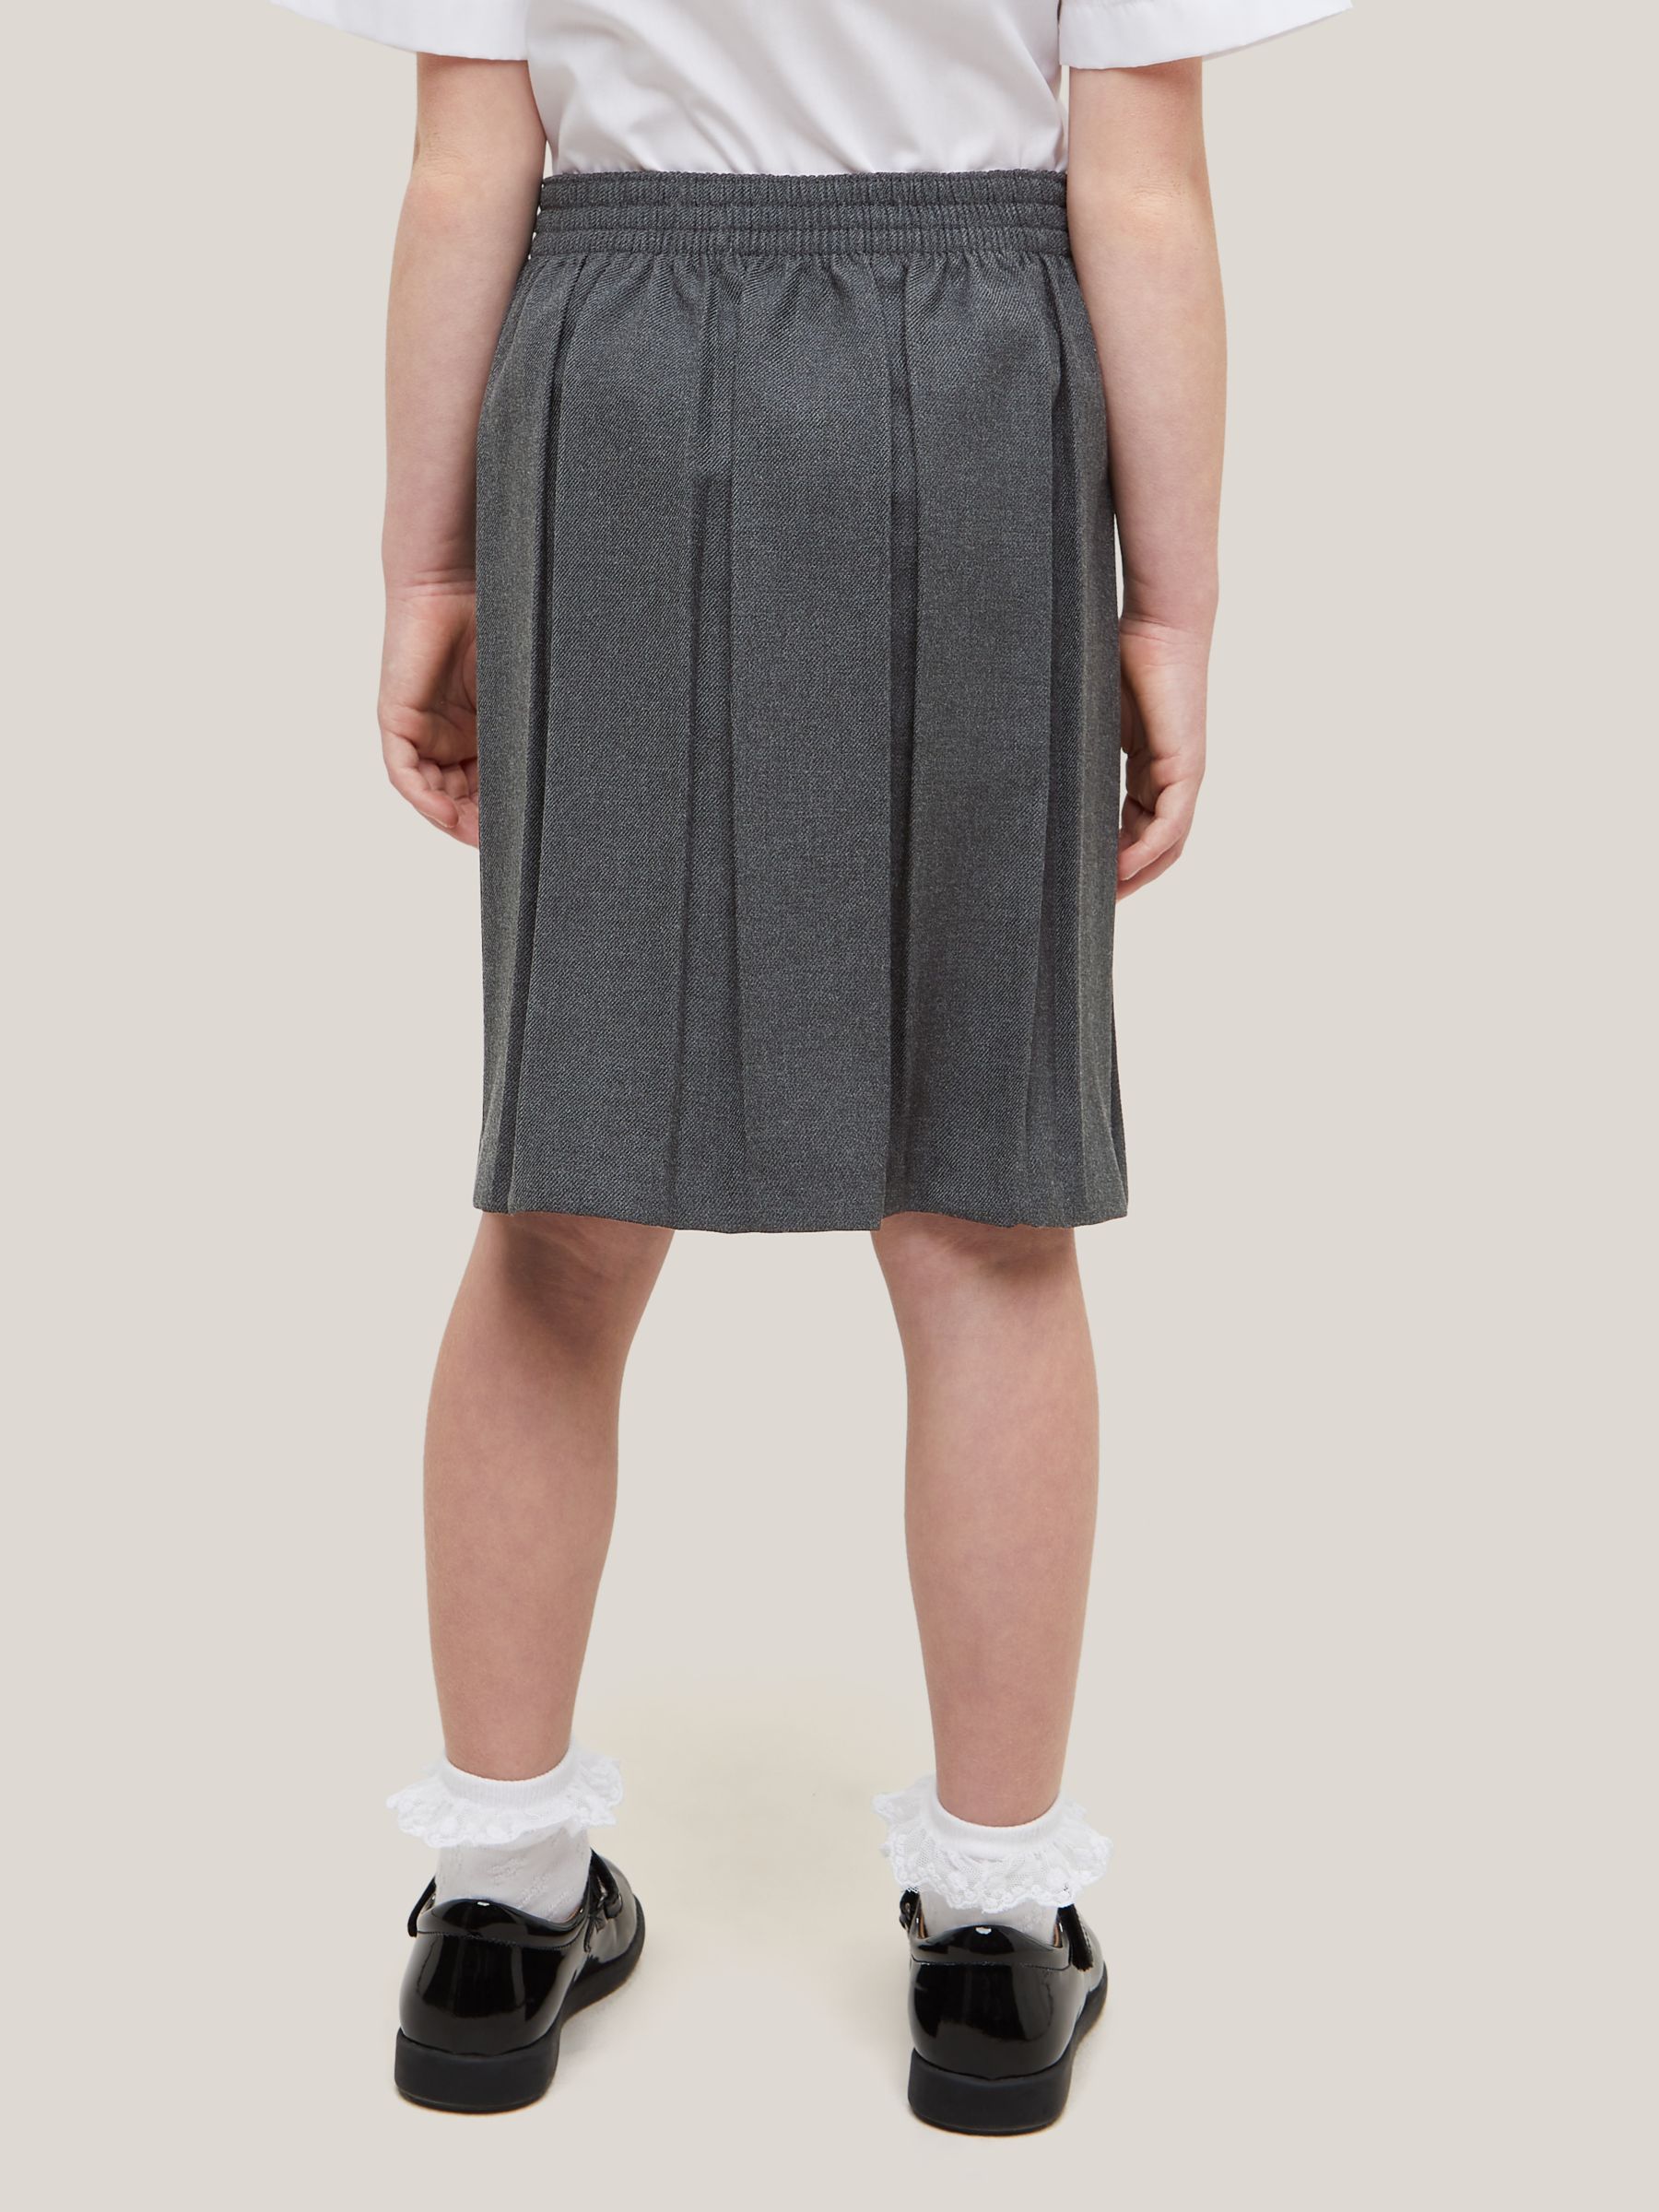 John Lewis Girls' Easy Care Pleated School Skirt, Grey at John Lewis ...